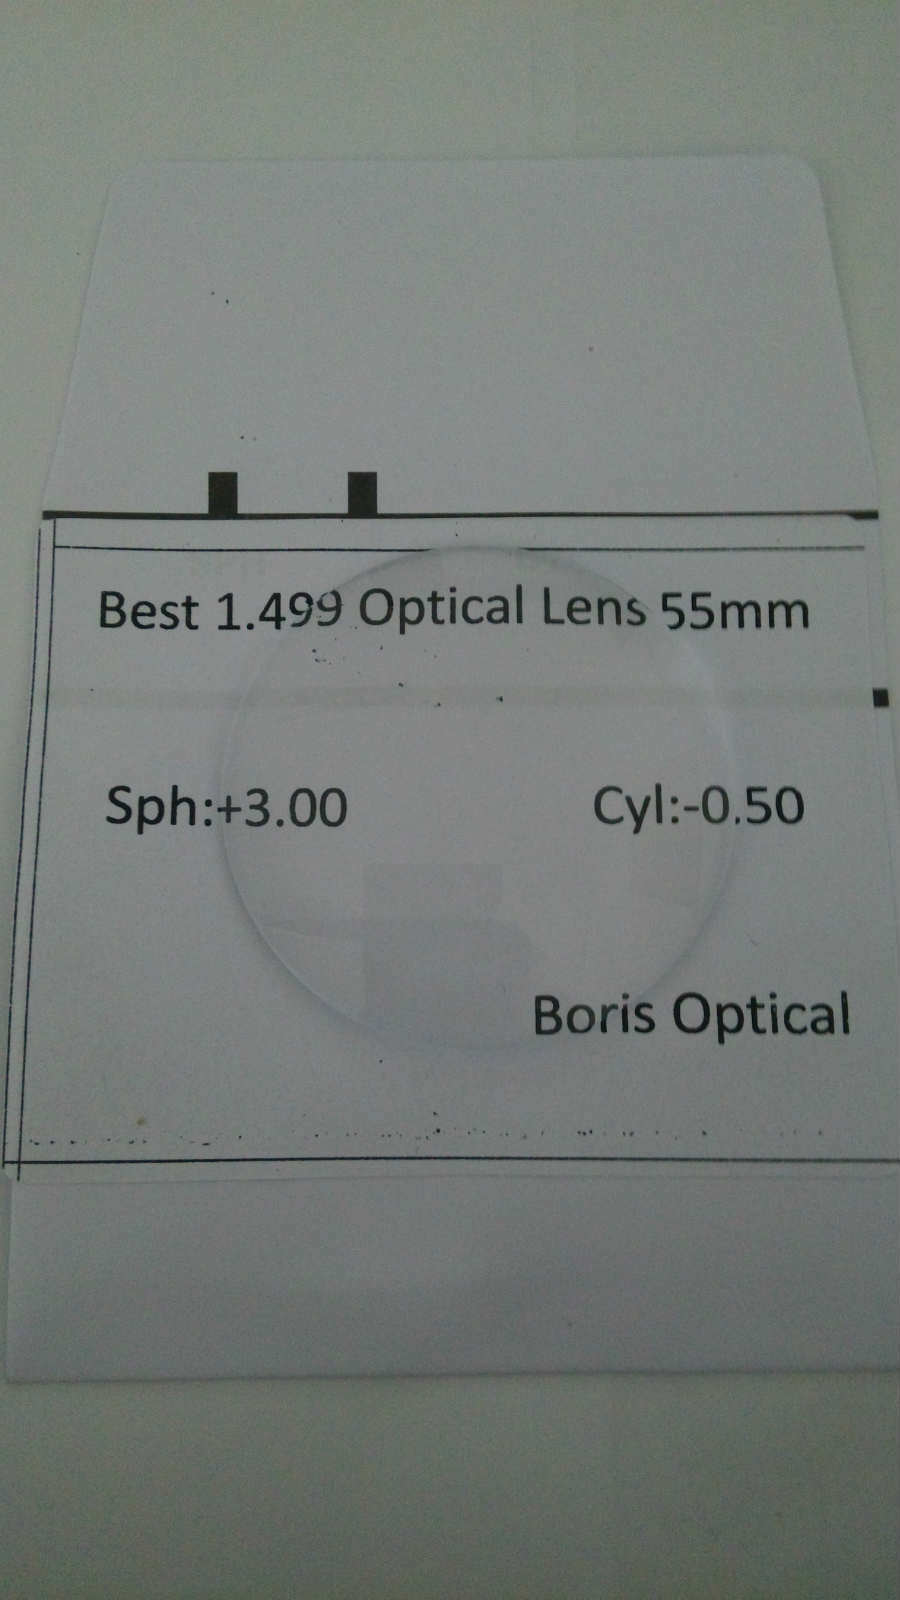 Best 1.499 Uc Optical Lens 55mm (BS017)